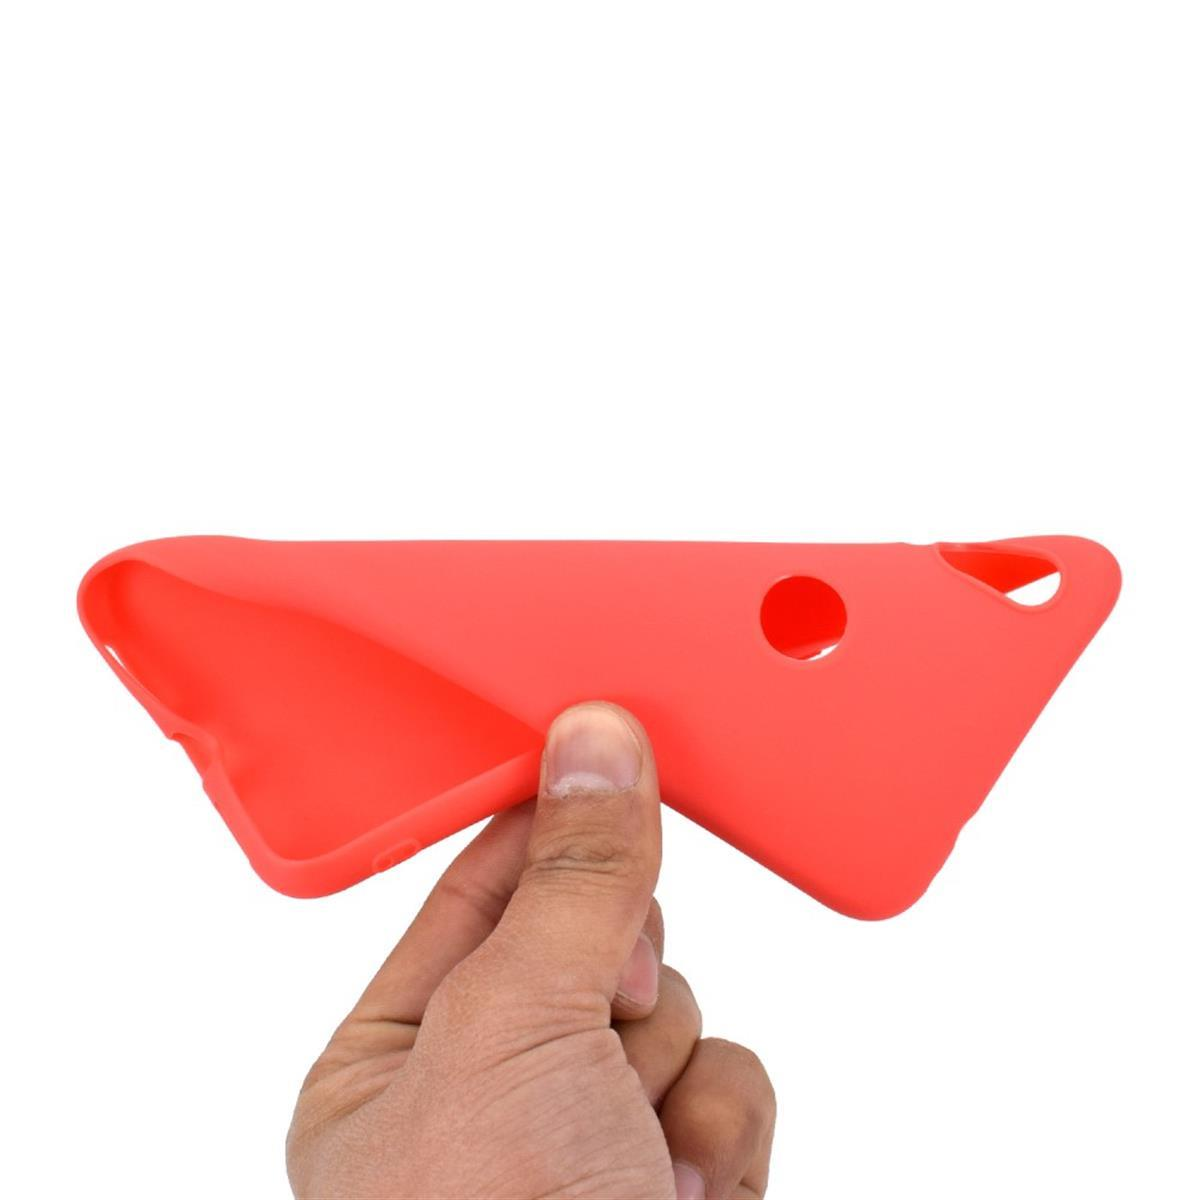 Rot Redmi Xiaomi, aus Backcover, Silikon, Note Handycase 7, COVERKINGZ